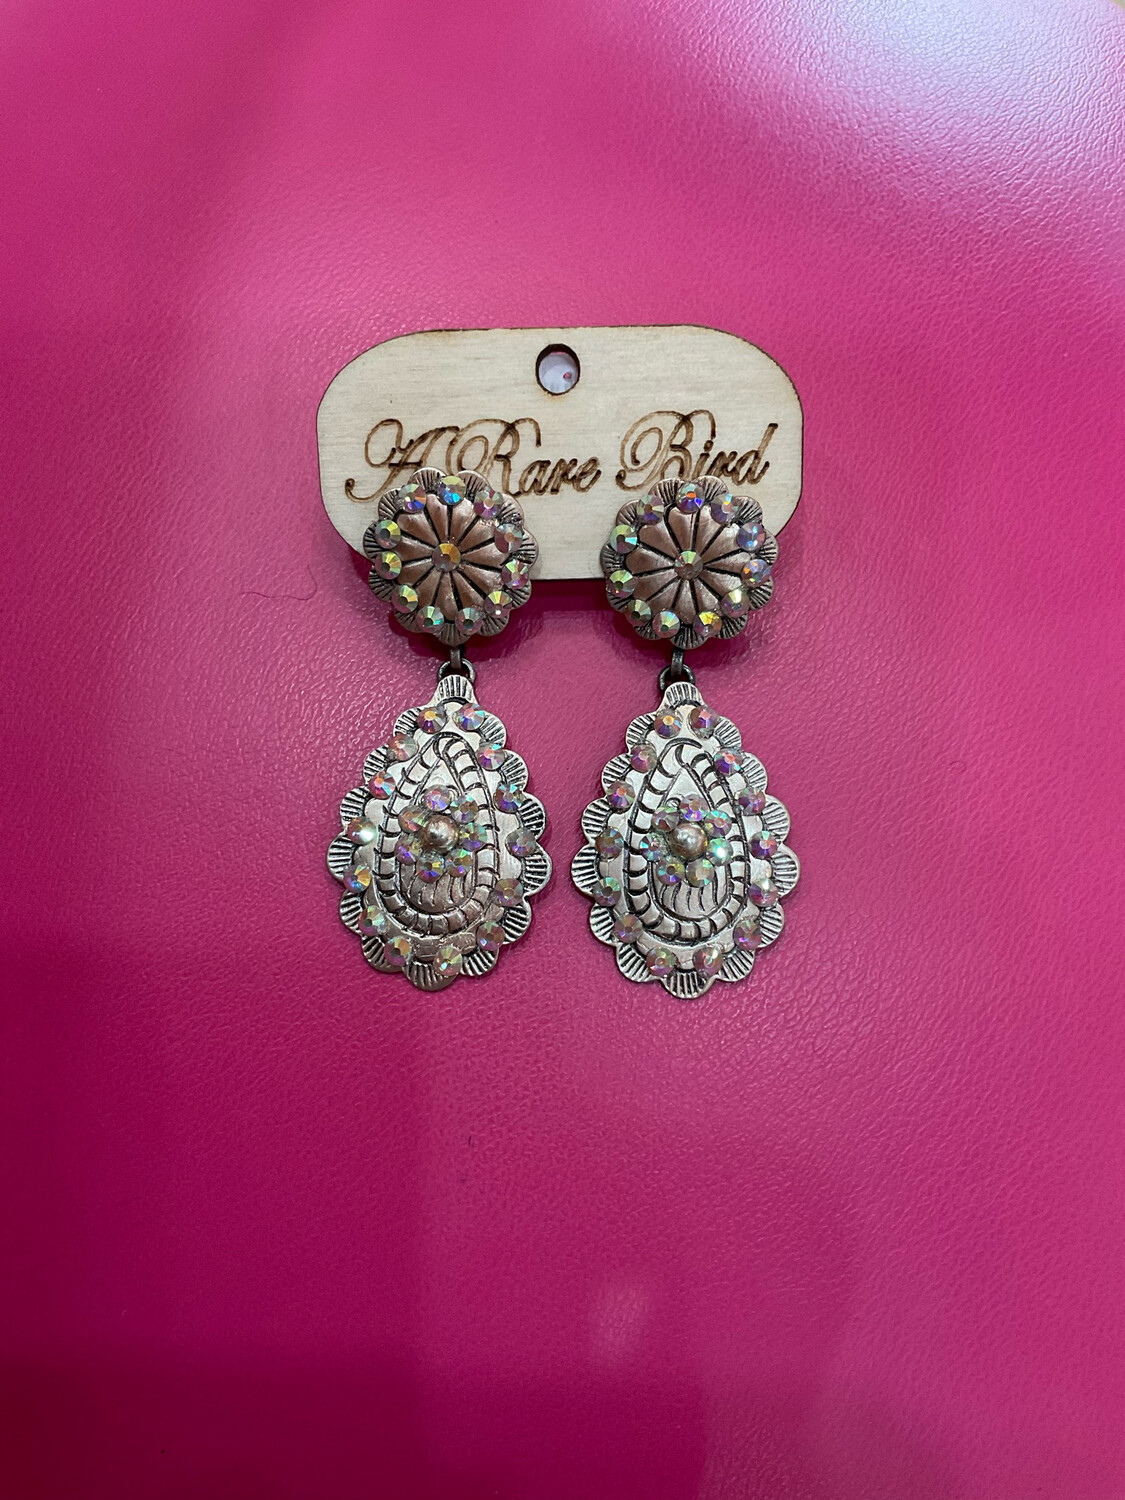 A Rare Bird Crystal Double Concho Earrings 